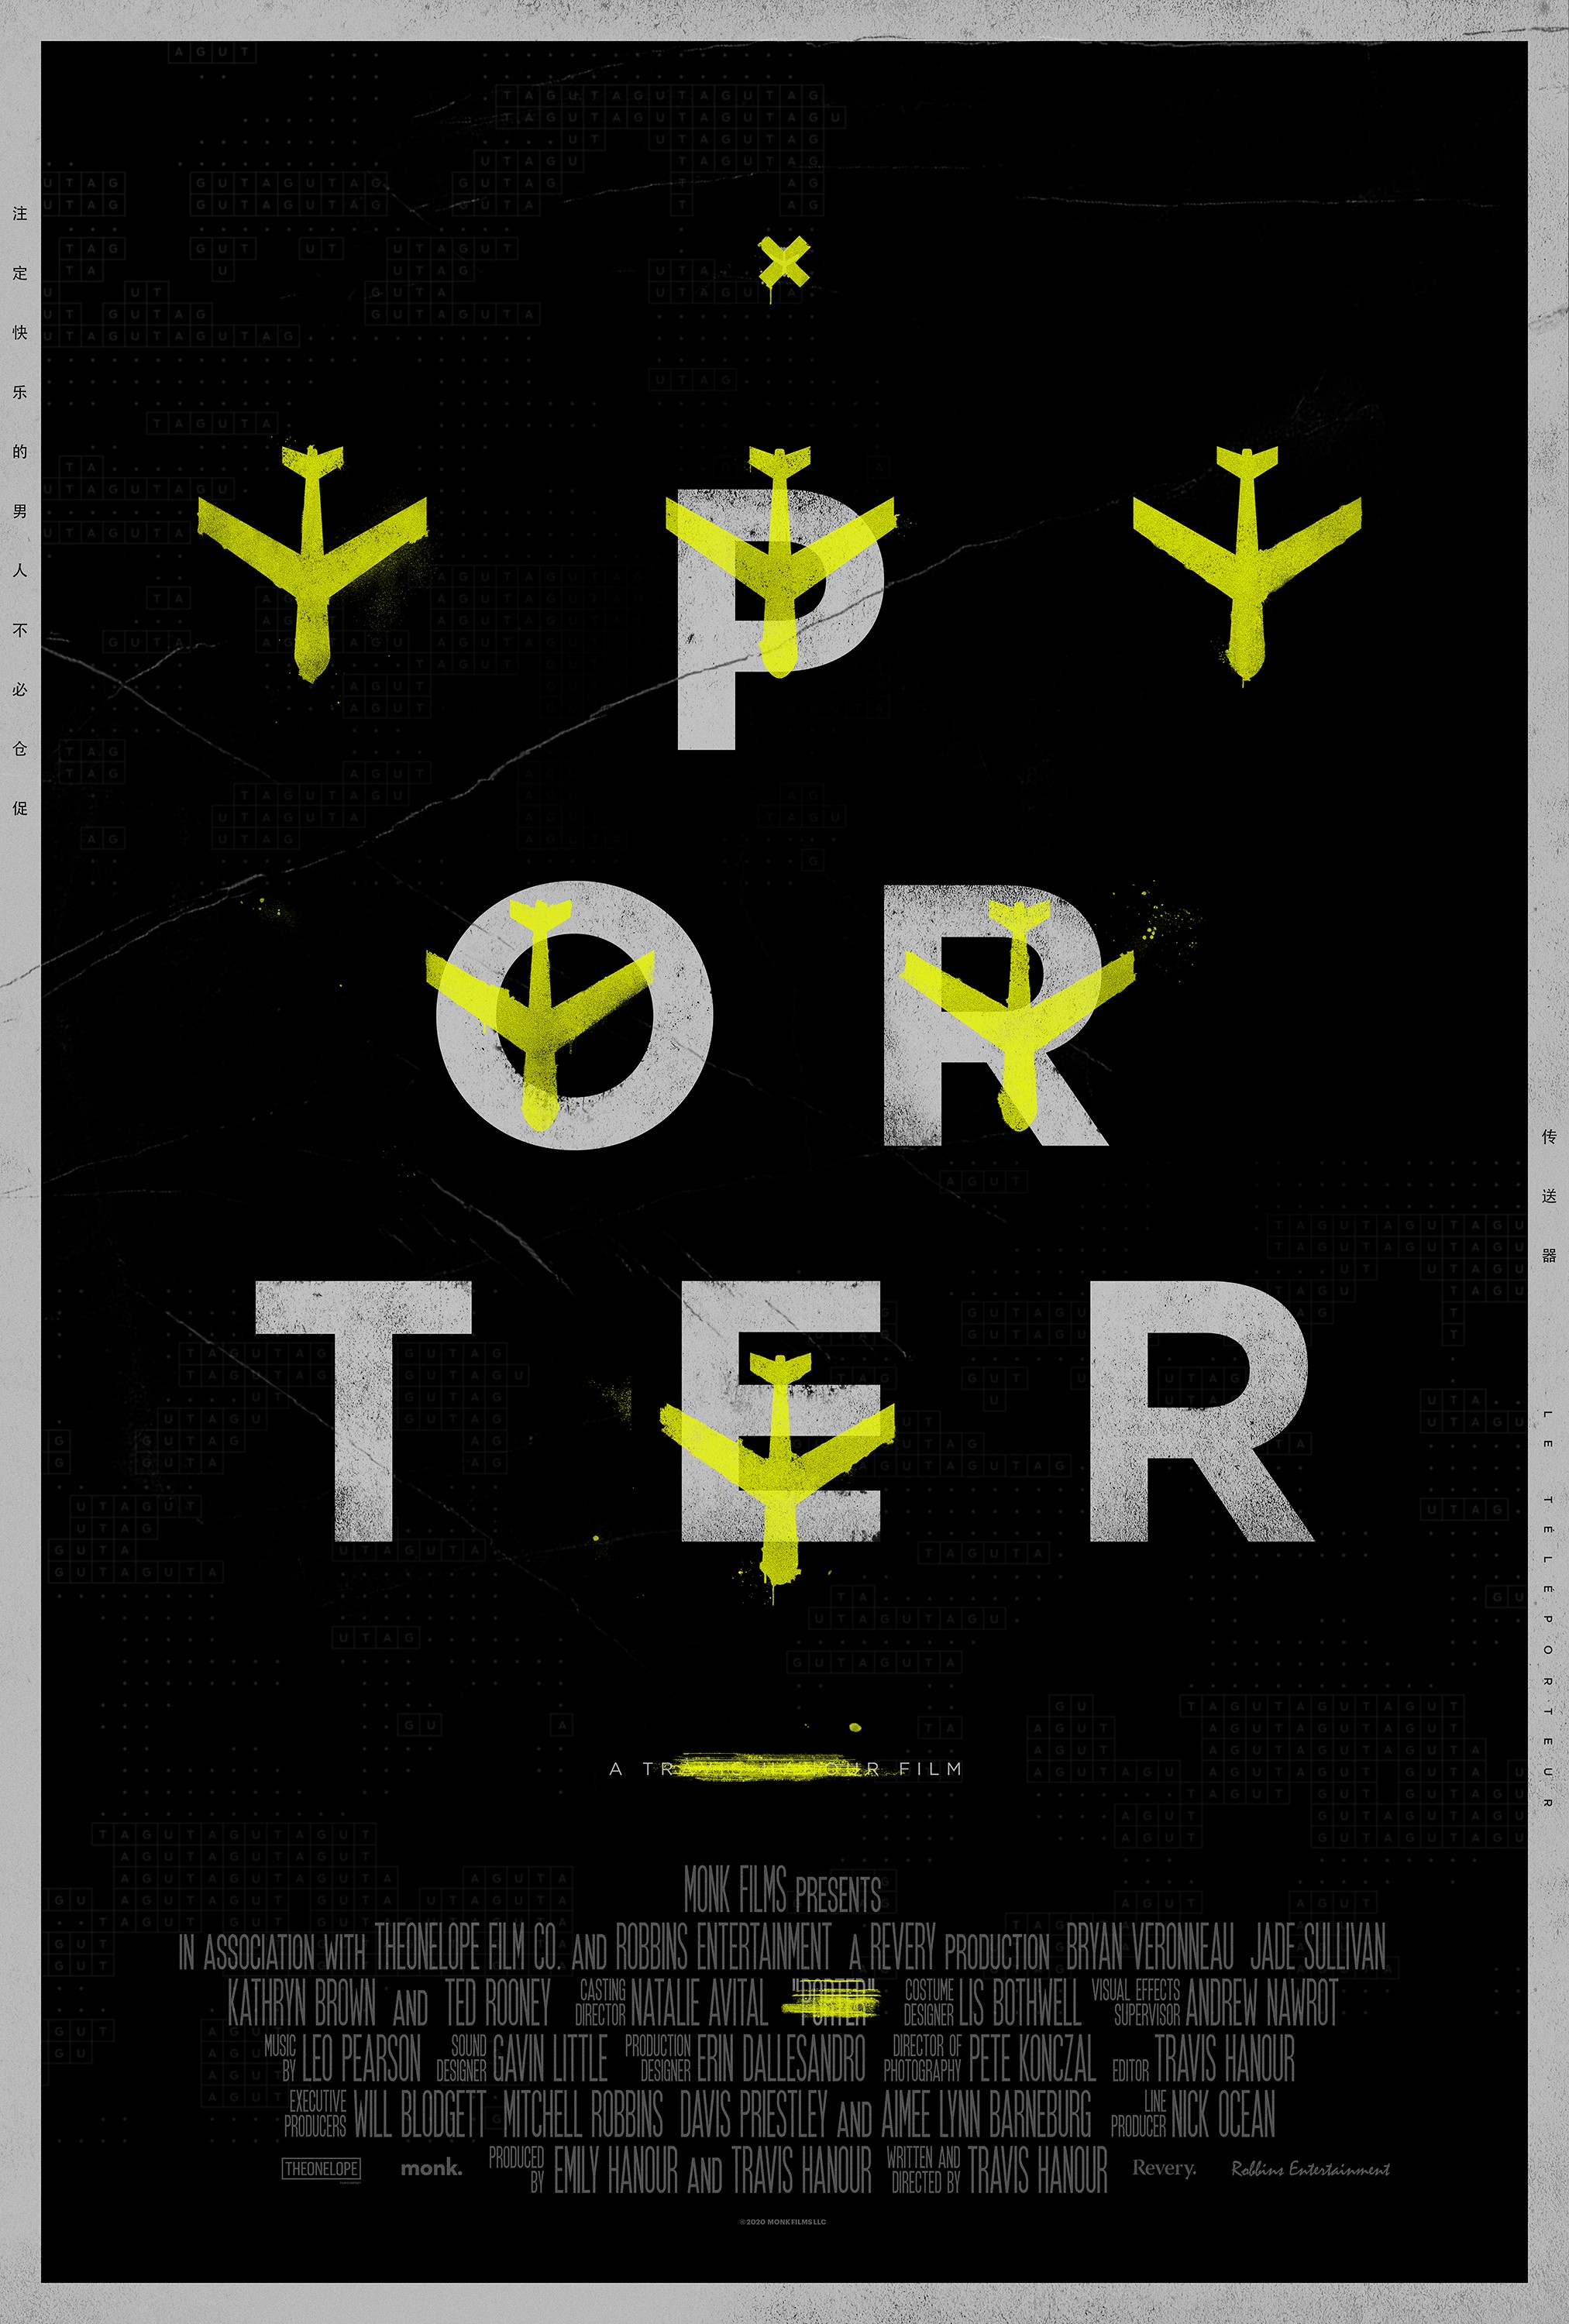 Mega Sized Movie Poster Image for Porter